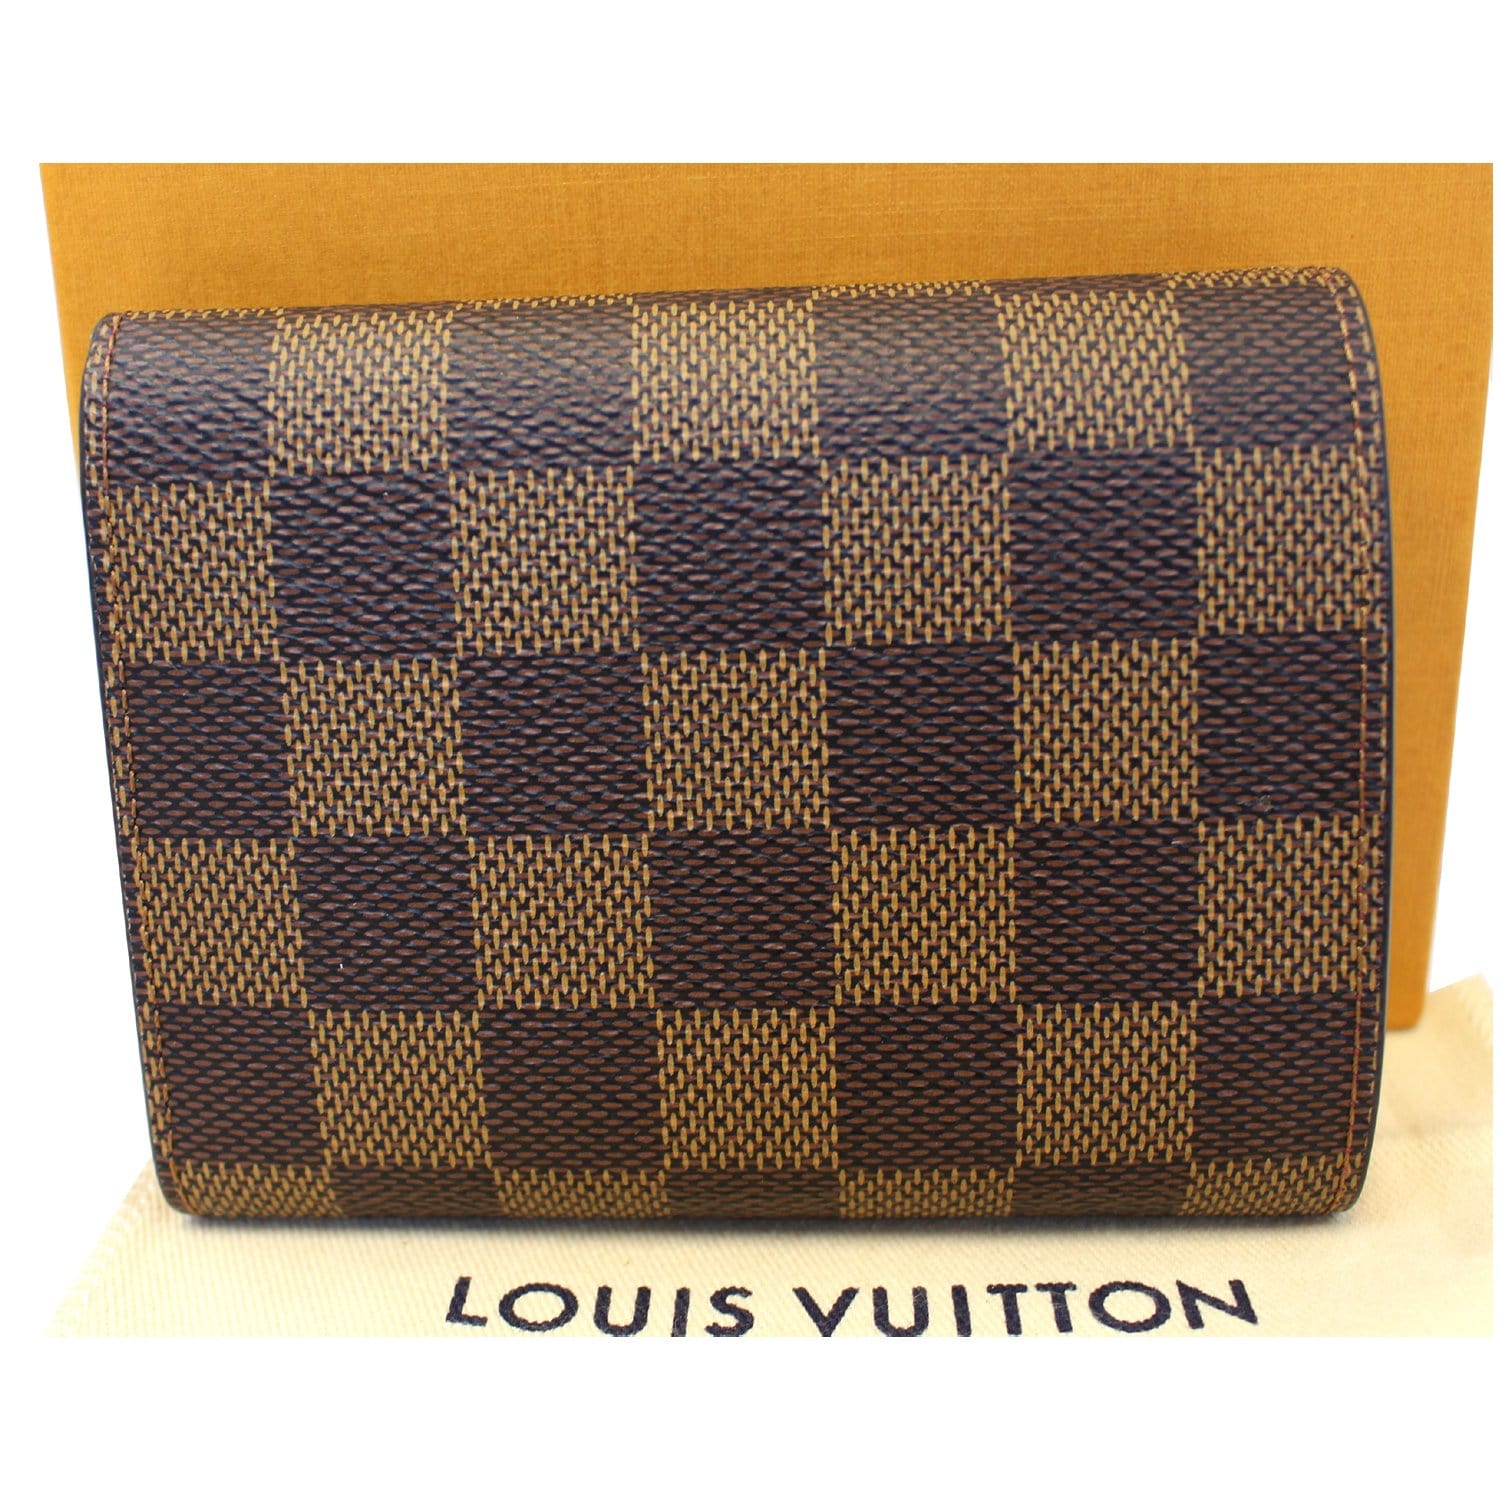 Louis Vuitton - Victorine Wallet Review - Damier Ebene Print